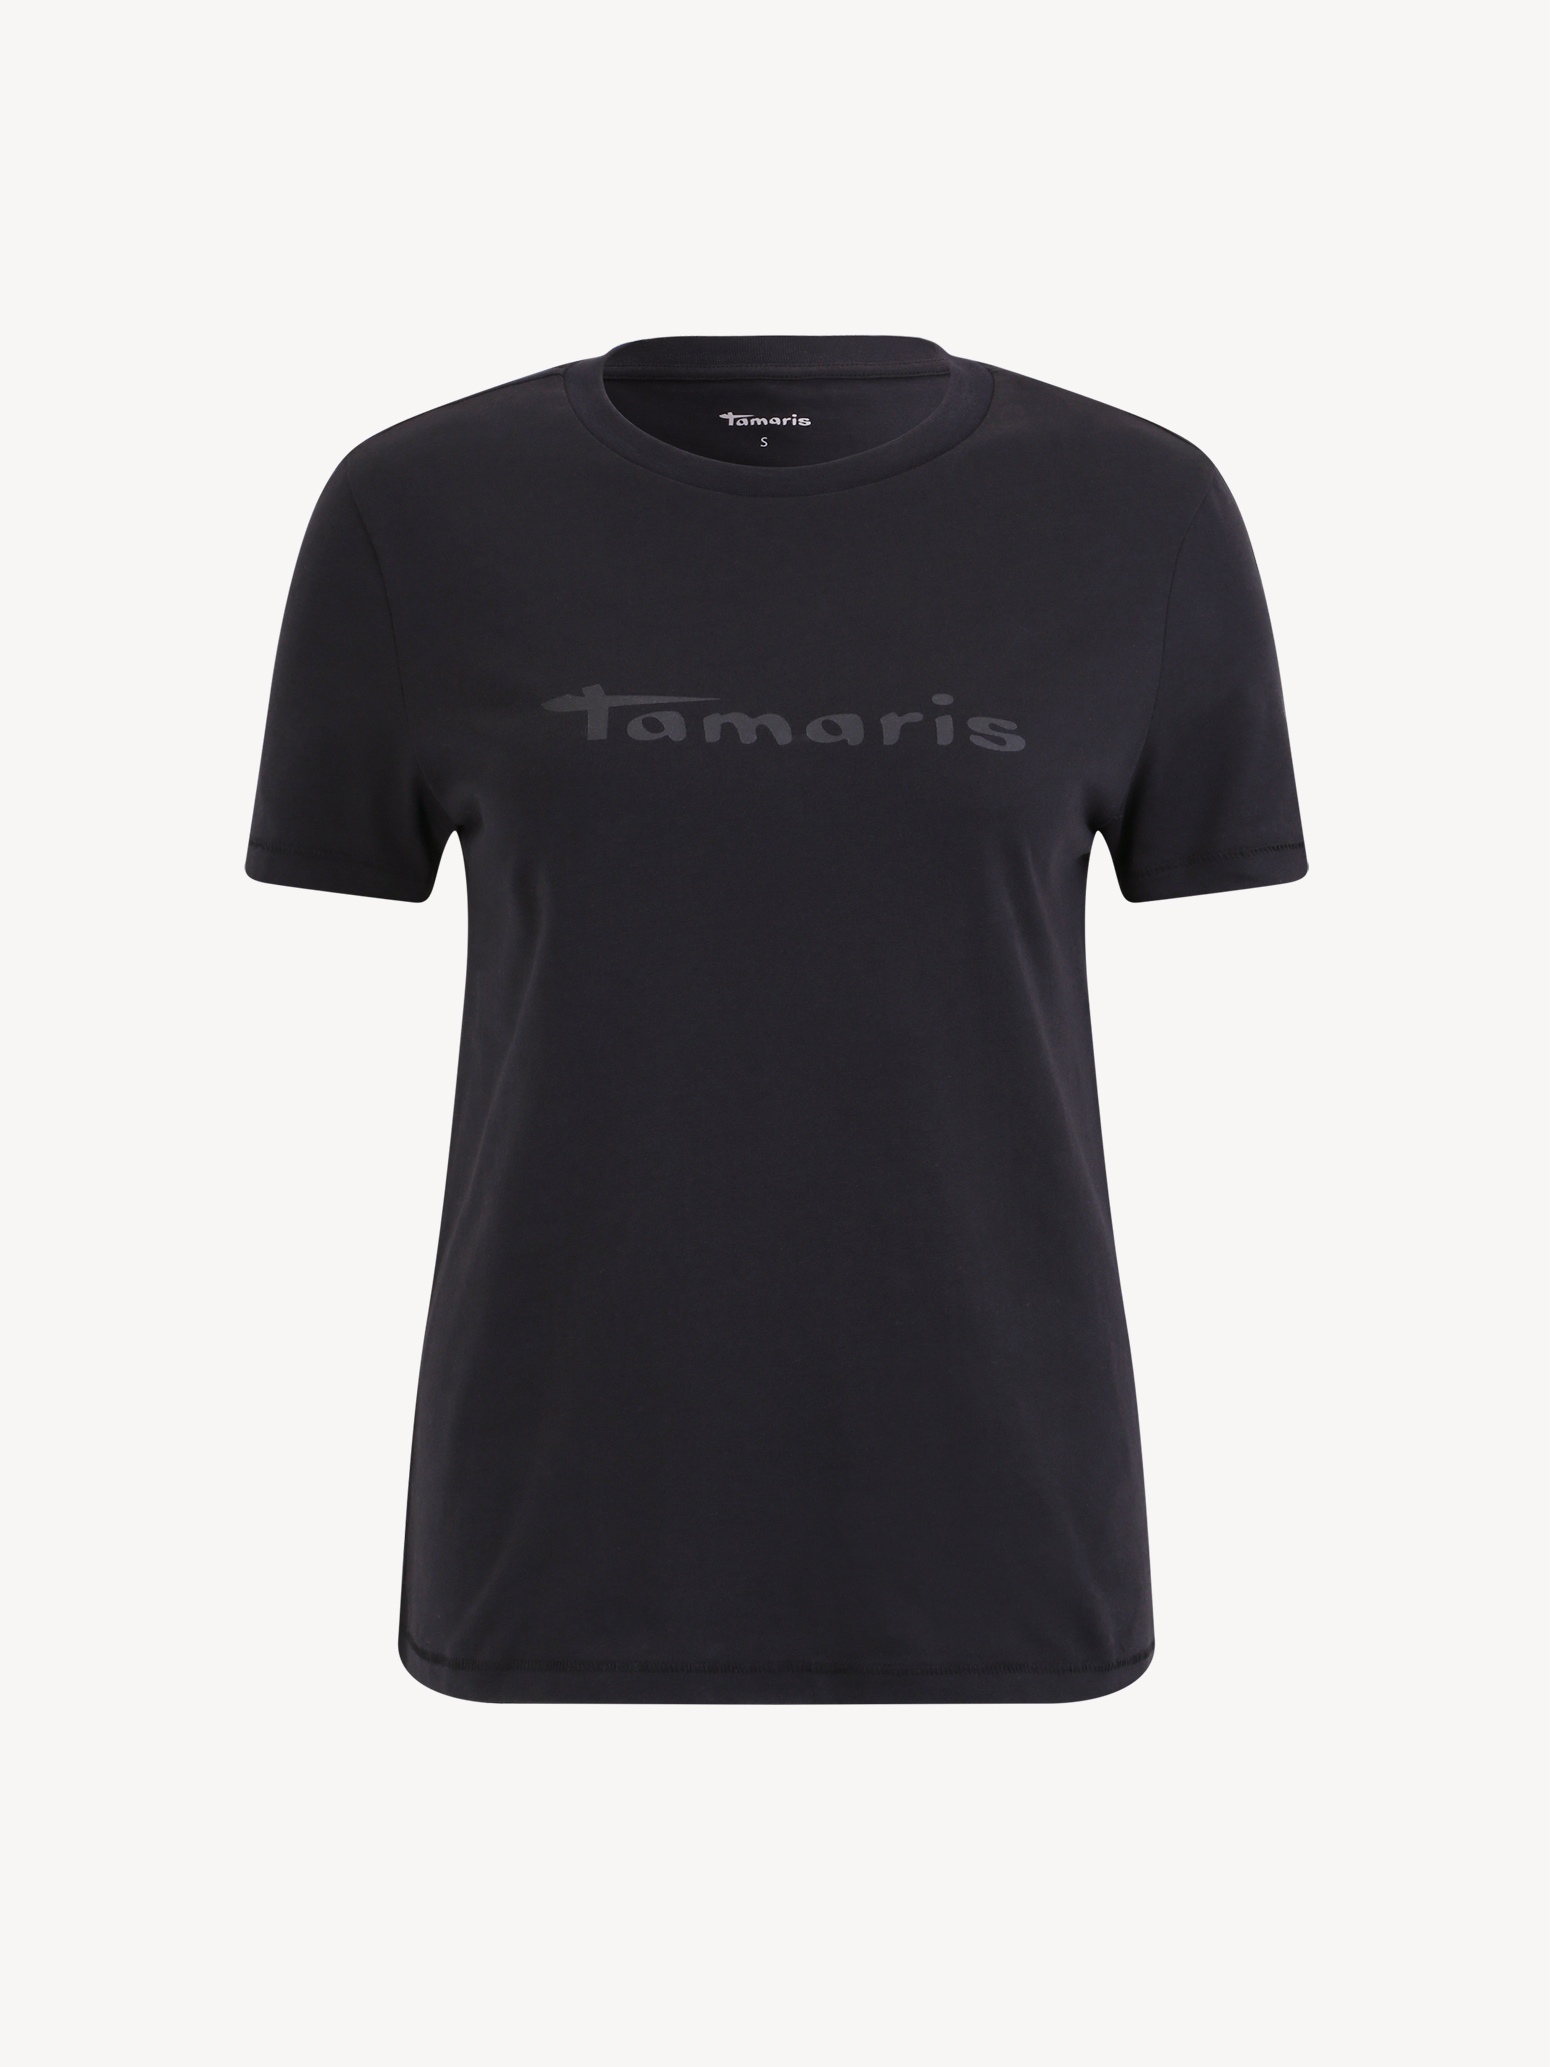 T-Shirt - schwarz TAW0121-80009: Tamaris T-Shirts online kaufen!